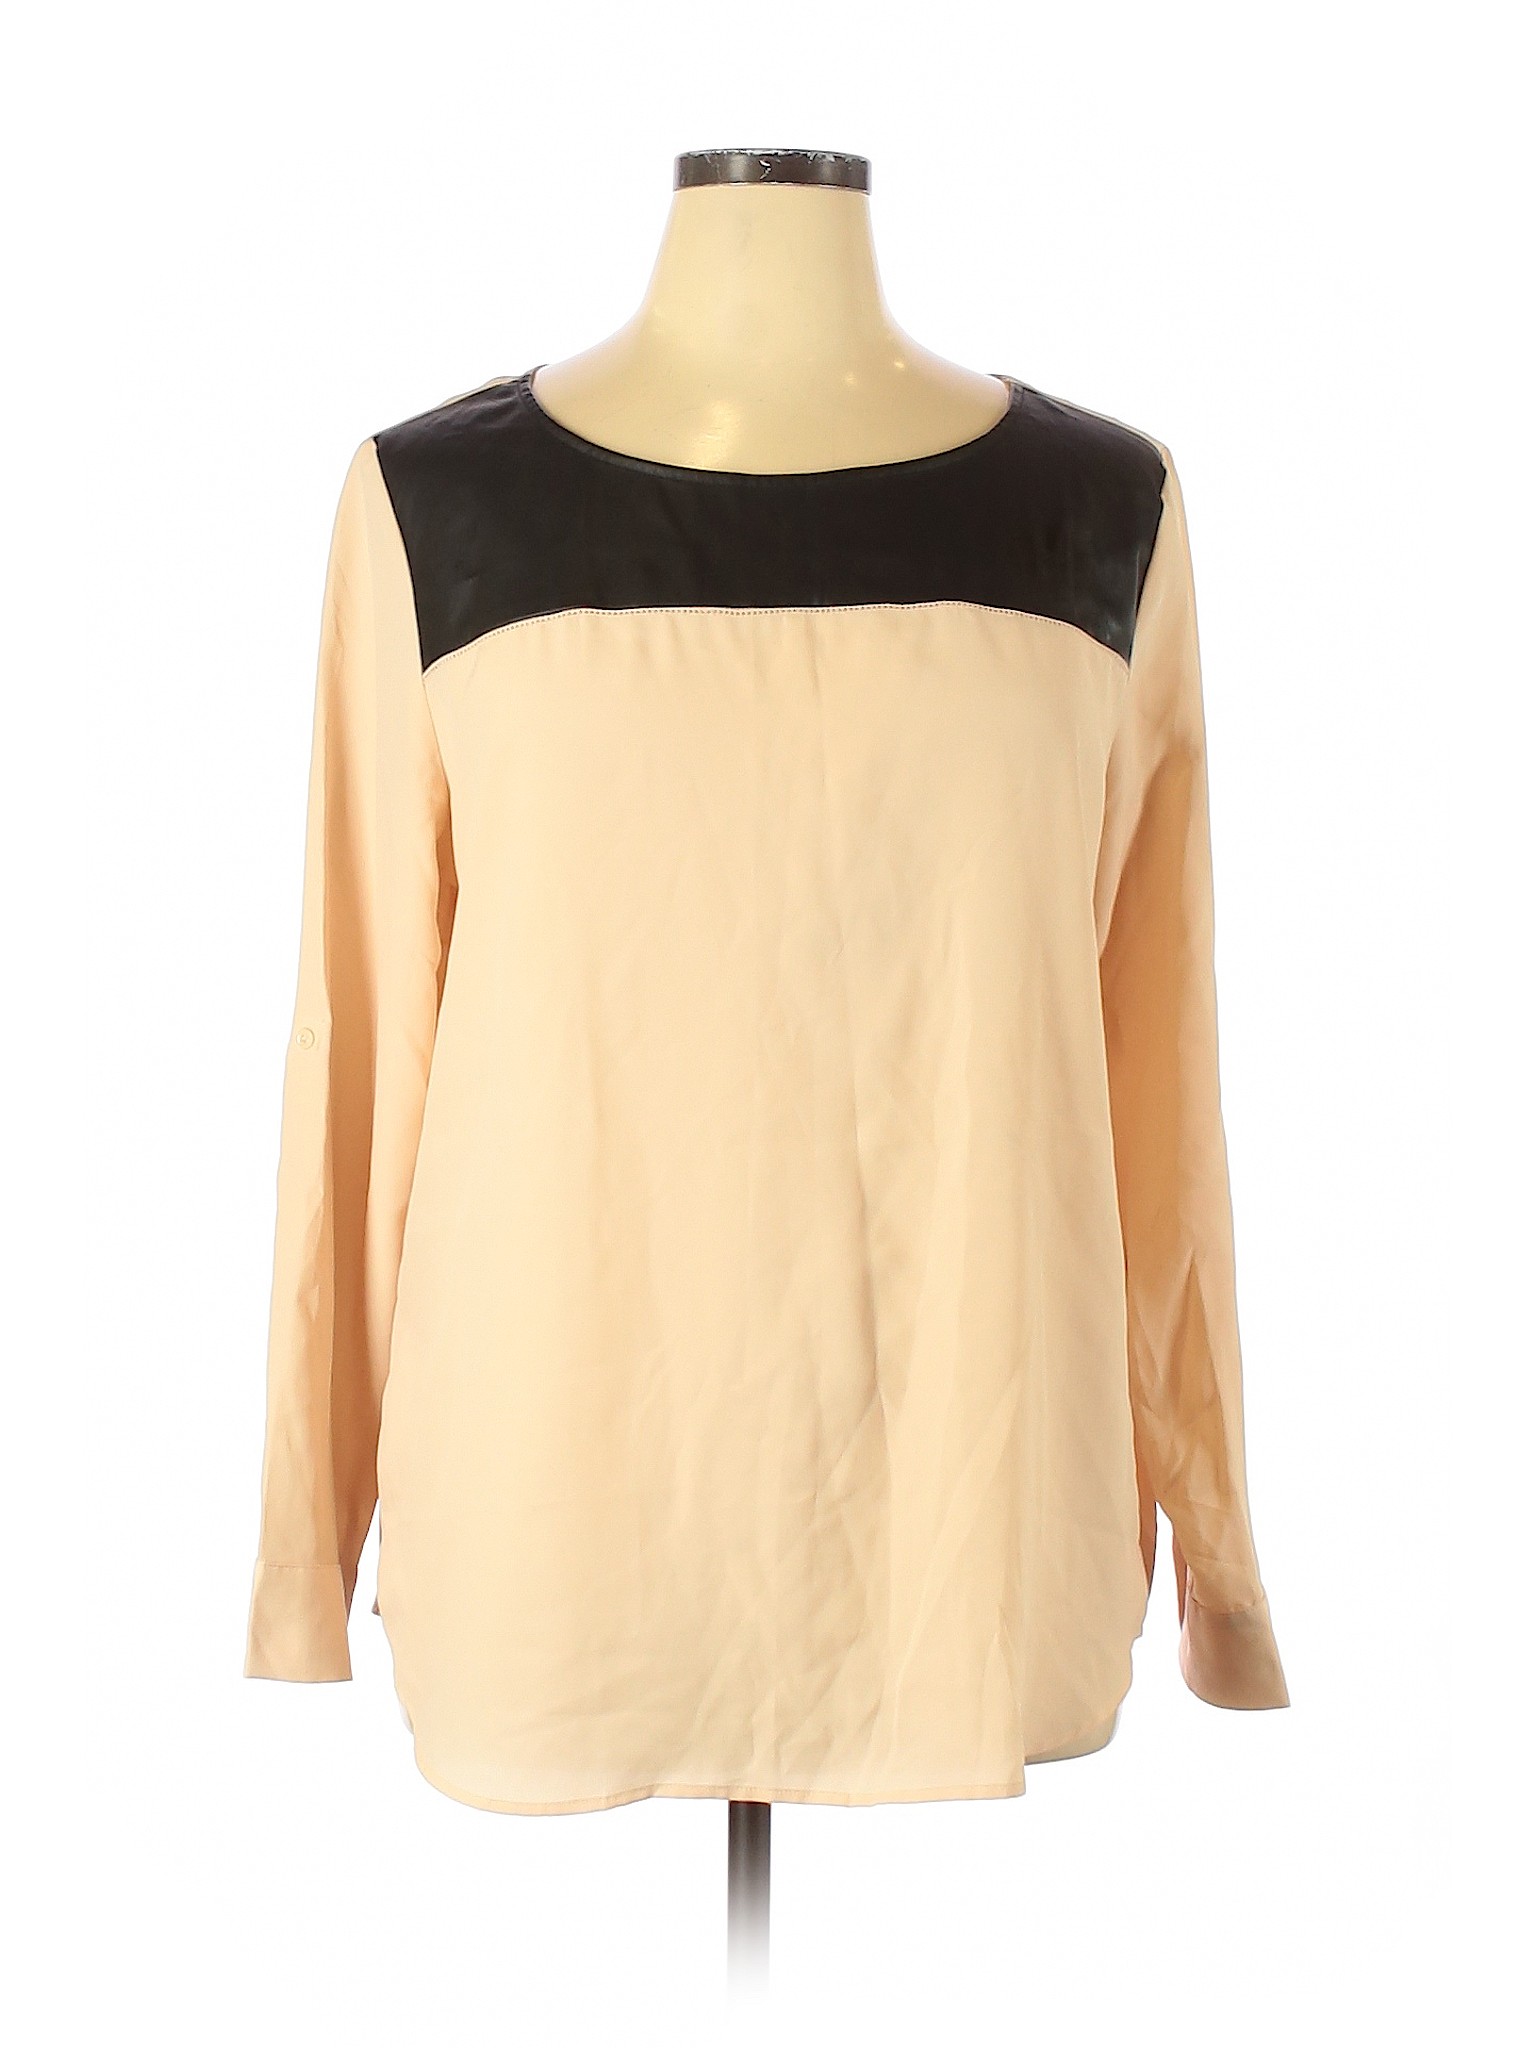 Ann Taylor LOFT Outlet Women Orange Long Sleeve Blouse XL | eBay